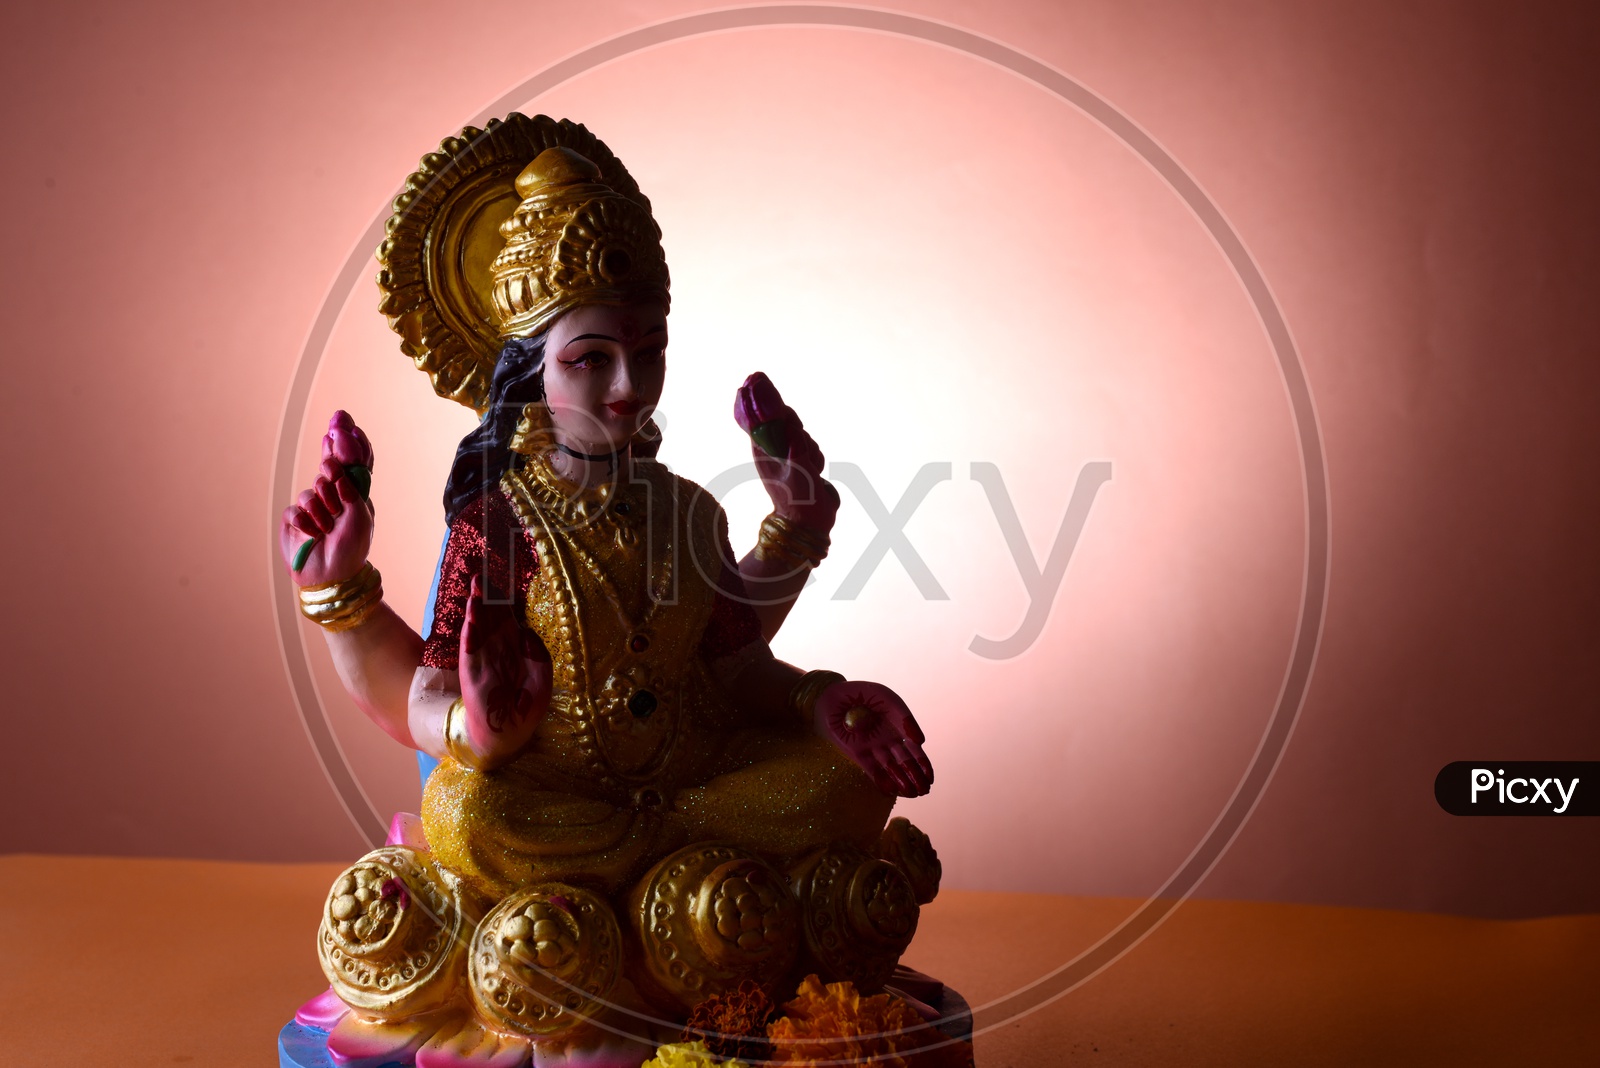 Indian Hindu Goddess Lakshmi Idols During Diwali Festival Worships and Celebrations on an Isolated Background